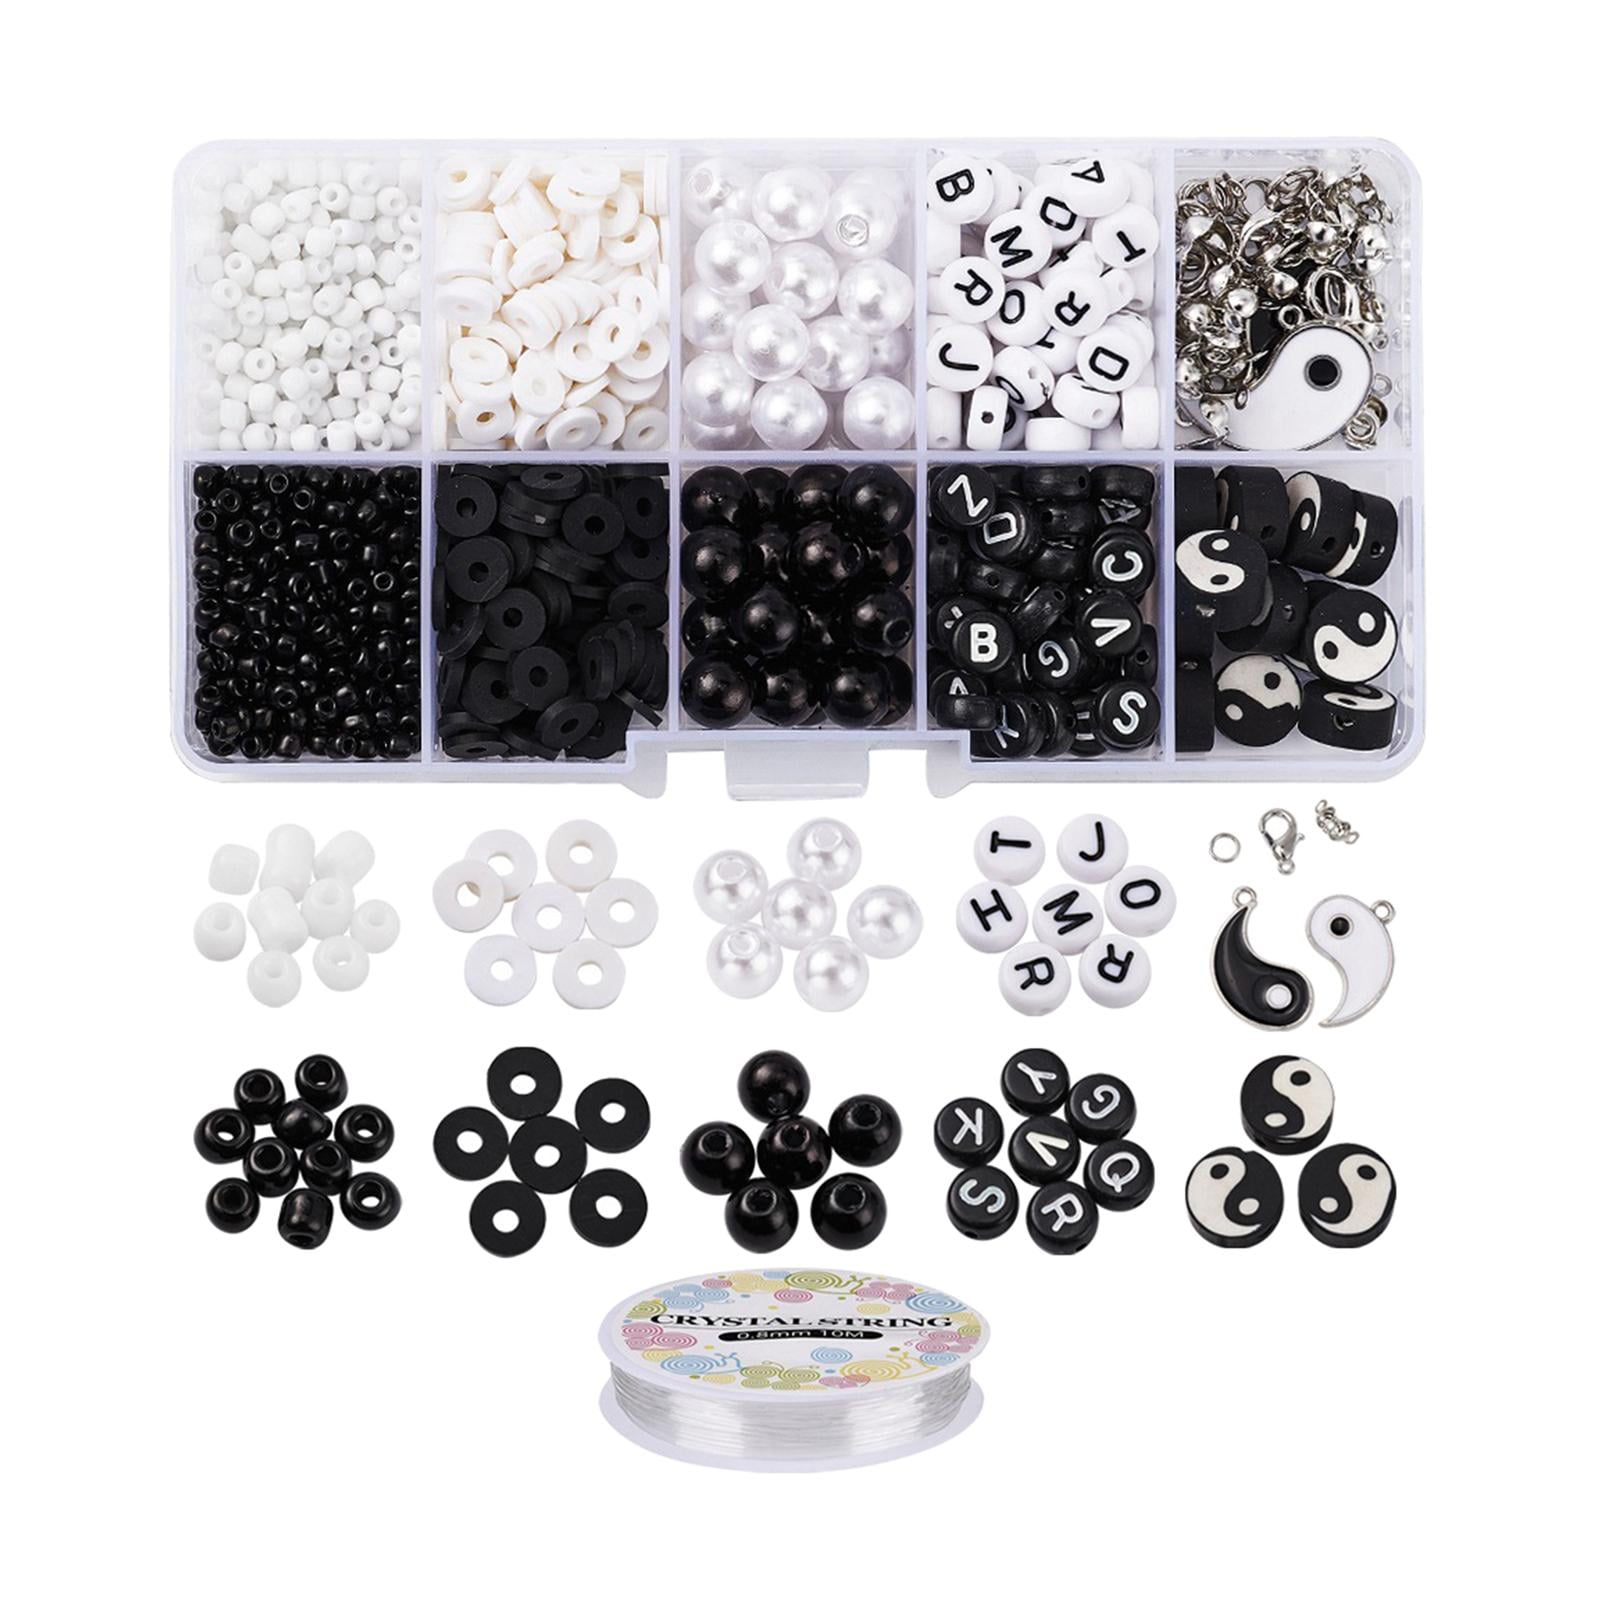 18ml Crackle Glue Black and White 3D Decorative Glue DIY Polymer Clay  Jewelry Pendant Crafts Model Surface Decorative Brightener - AliExpress